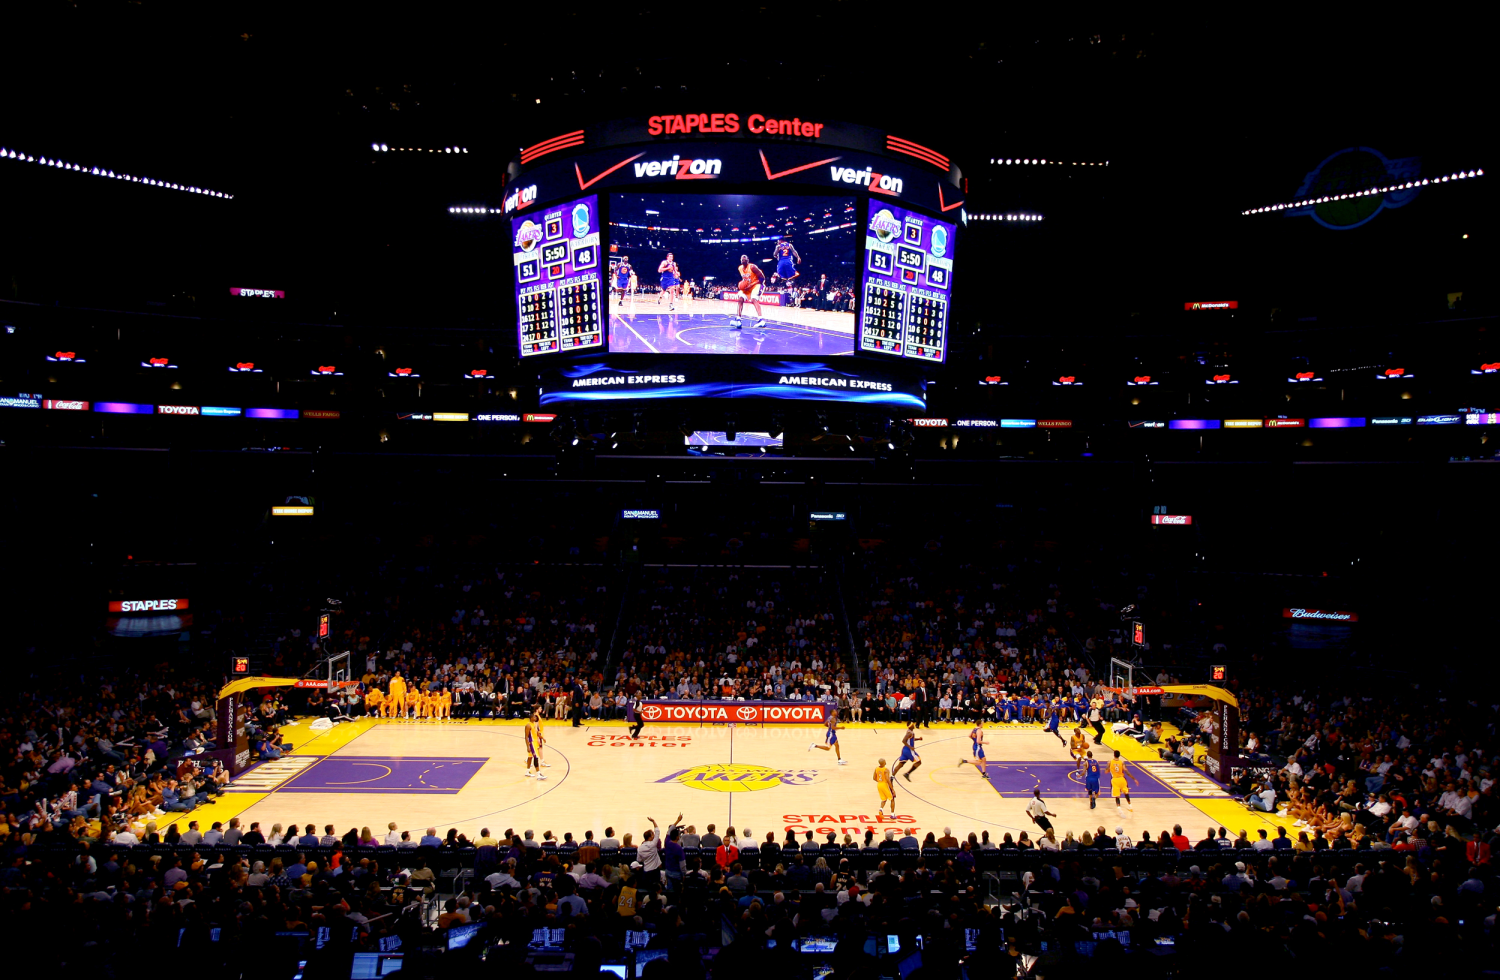 LA Kings PR on X: Our neighbors down the hall start regular season tonight  @staplescenter -- best of luck this season @Lakers    / X